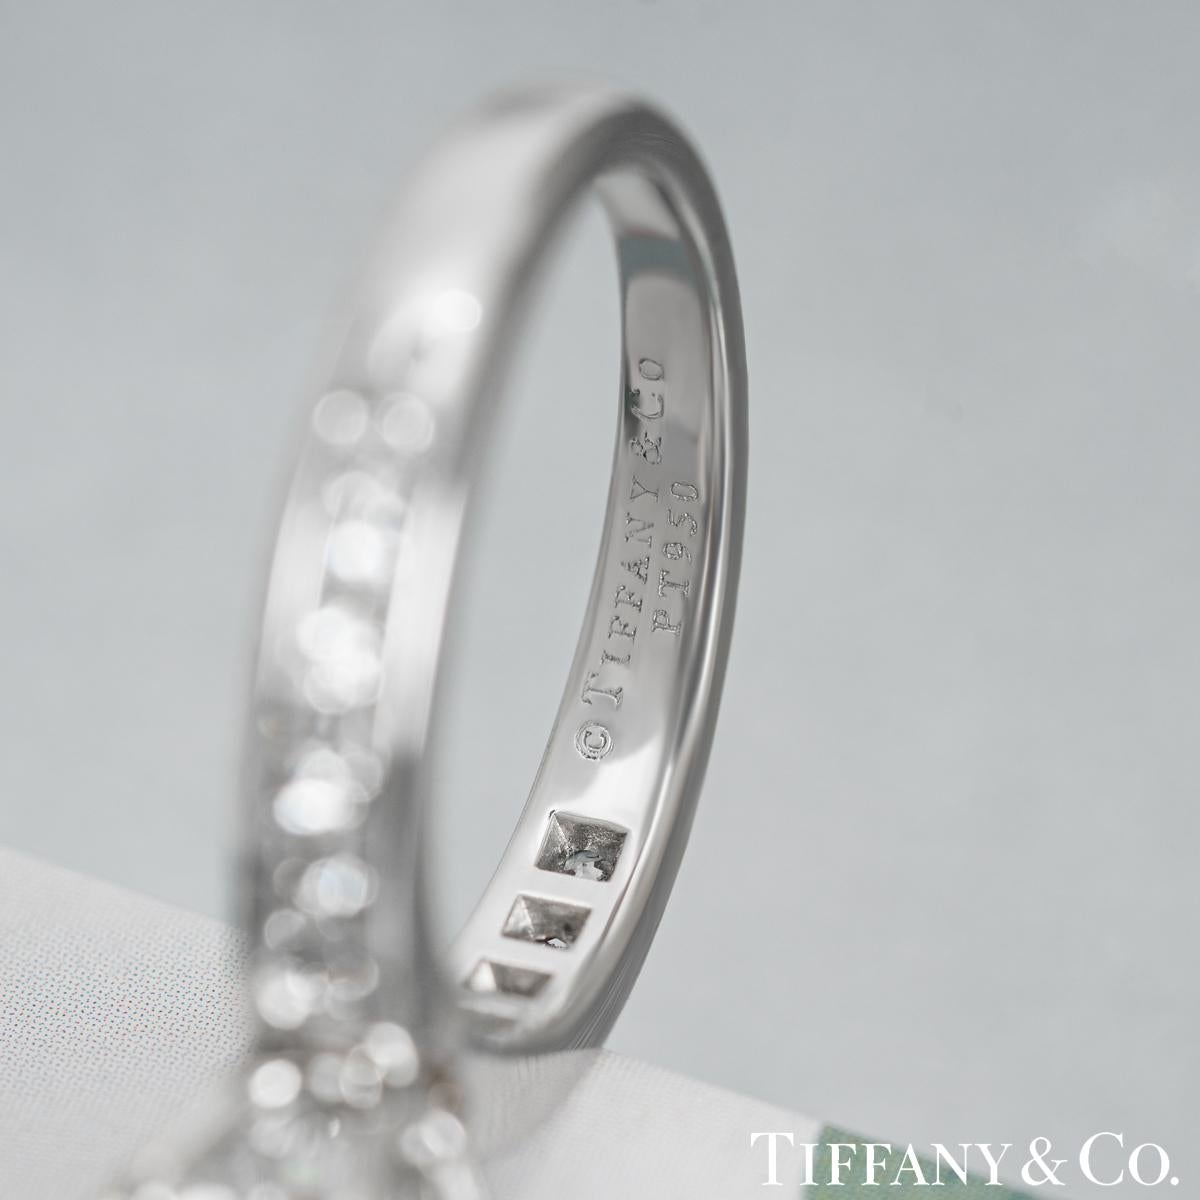 Tiffany & Co. Platinum Diamond Ring 1.28 Carat G/VVS2 For Sale 1